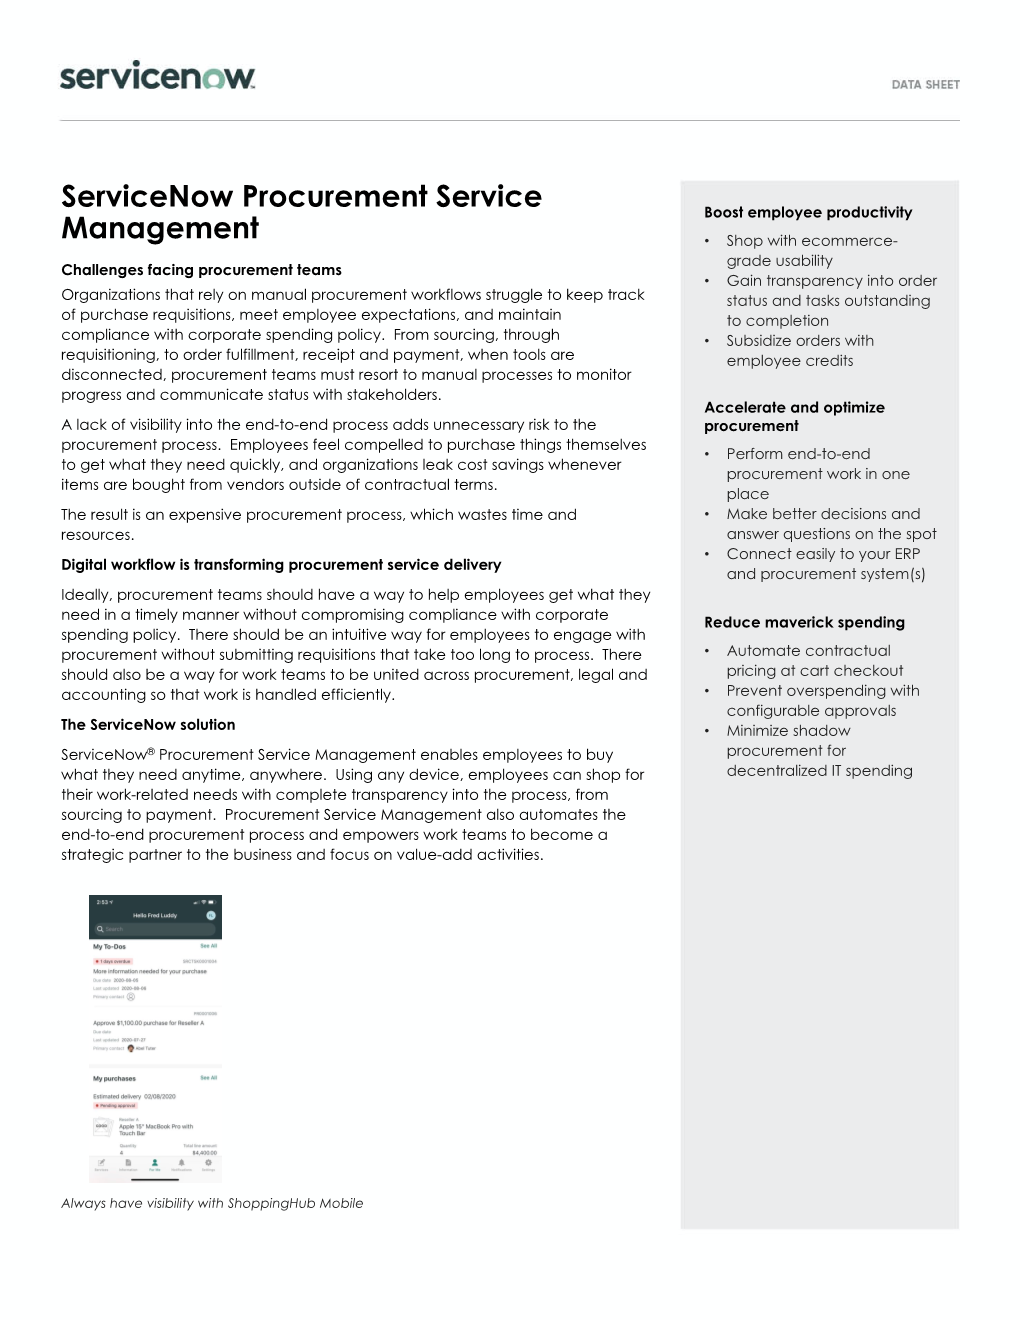 Procurement Service Management | Data Sheet | Servicenow